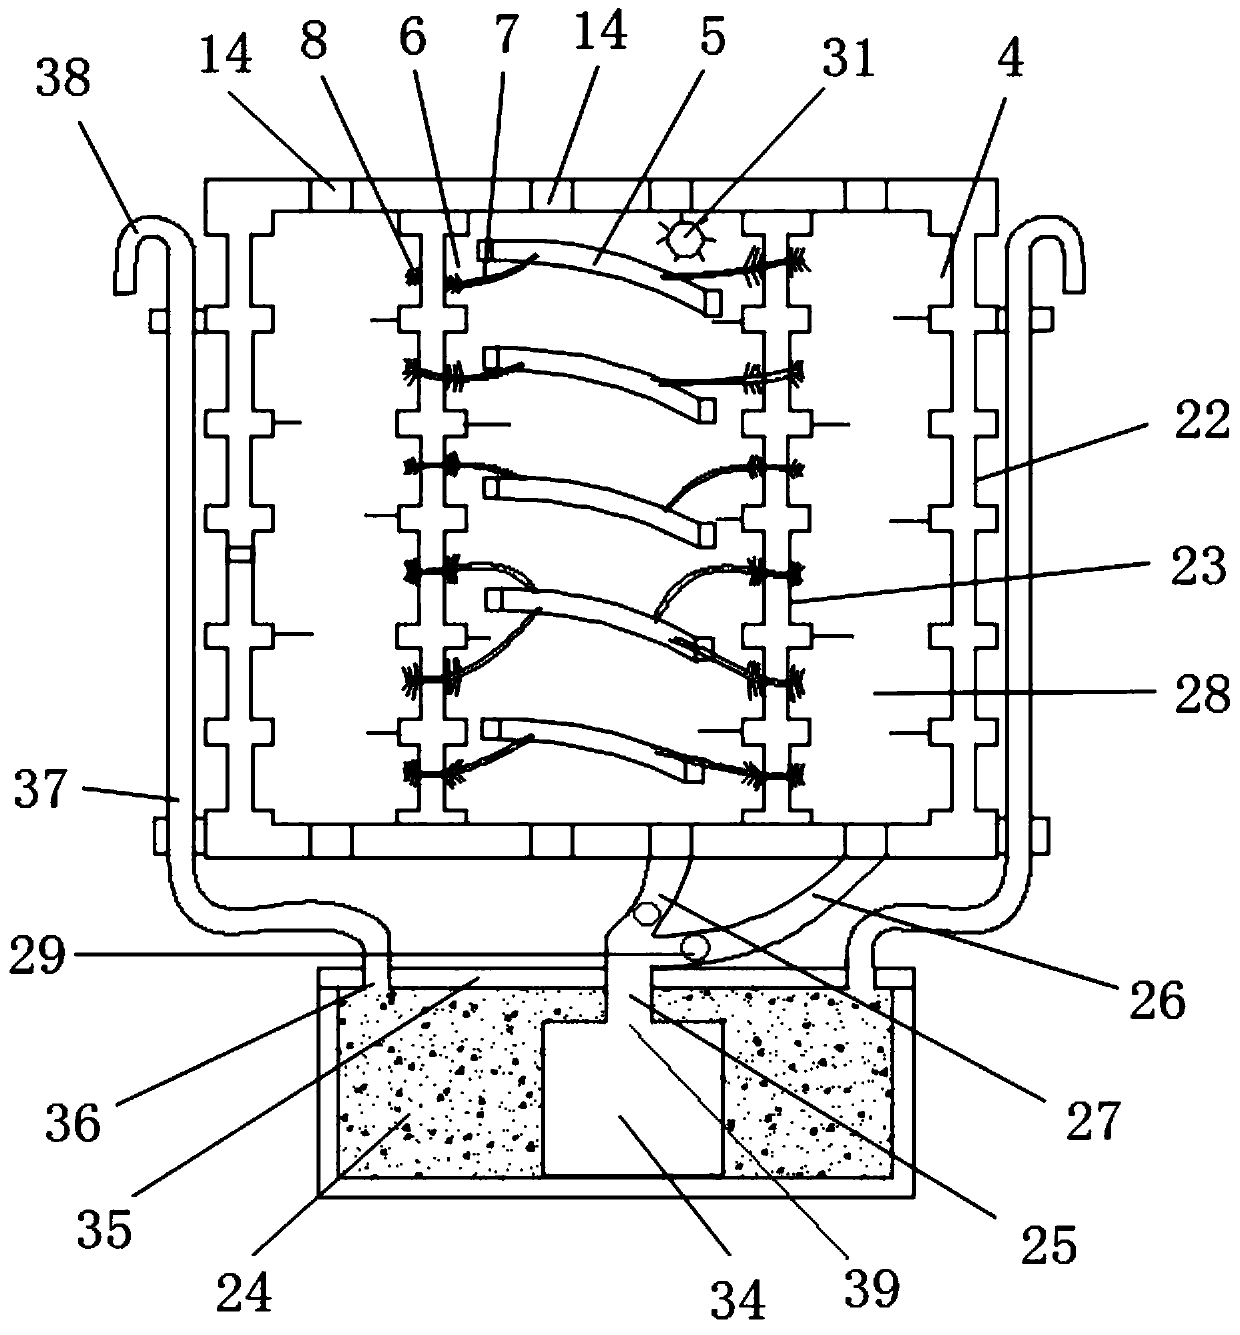 Rotary three-dimensional planting device